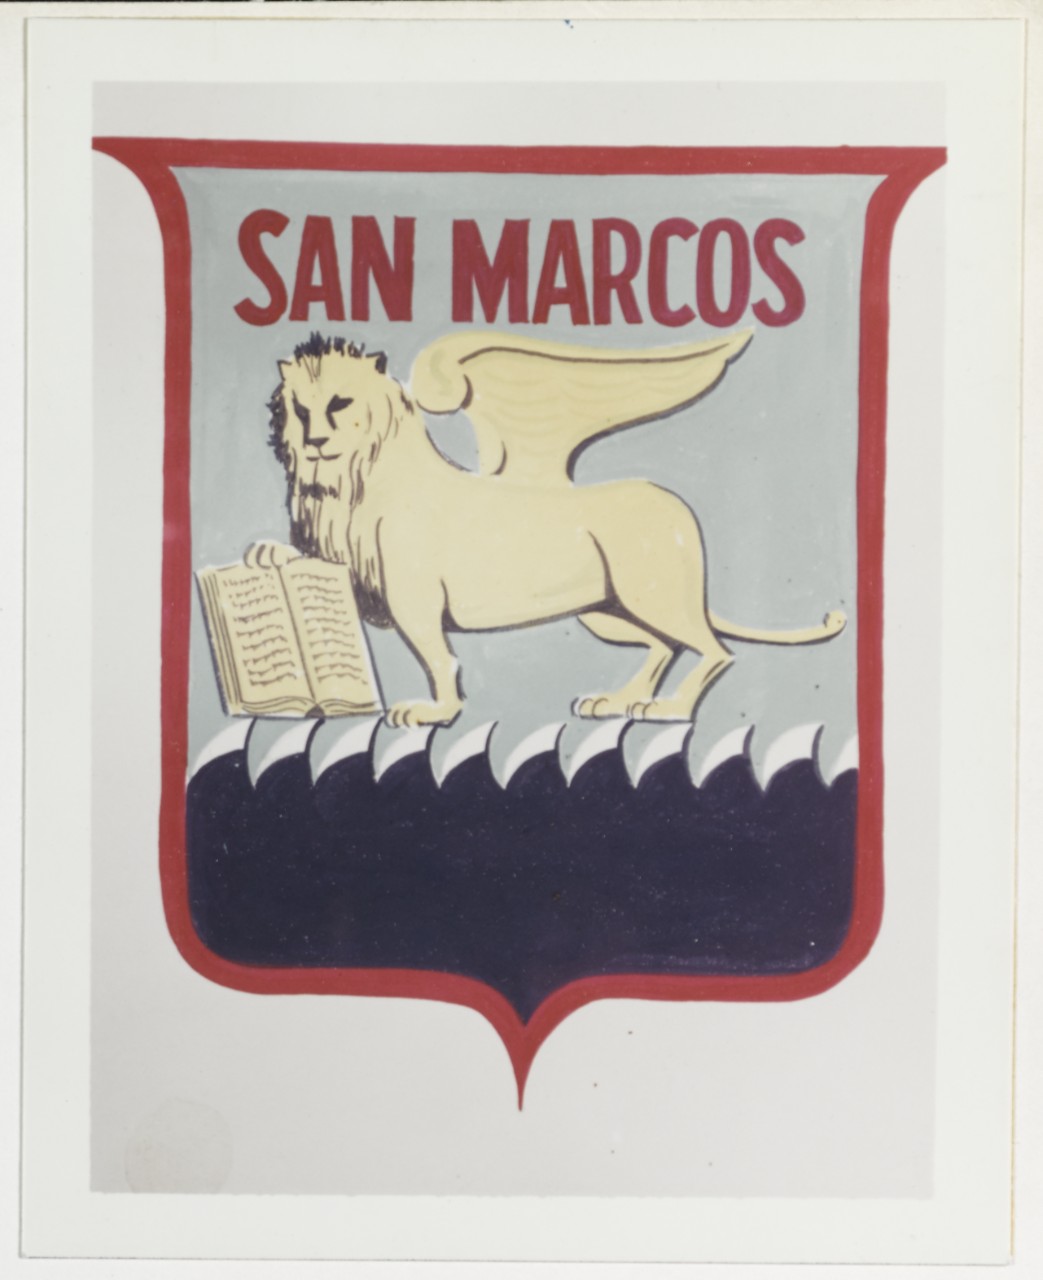 Insignia: USS SAN MARCOS (LSD-25)